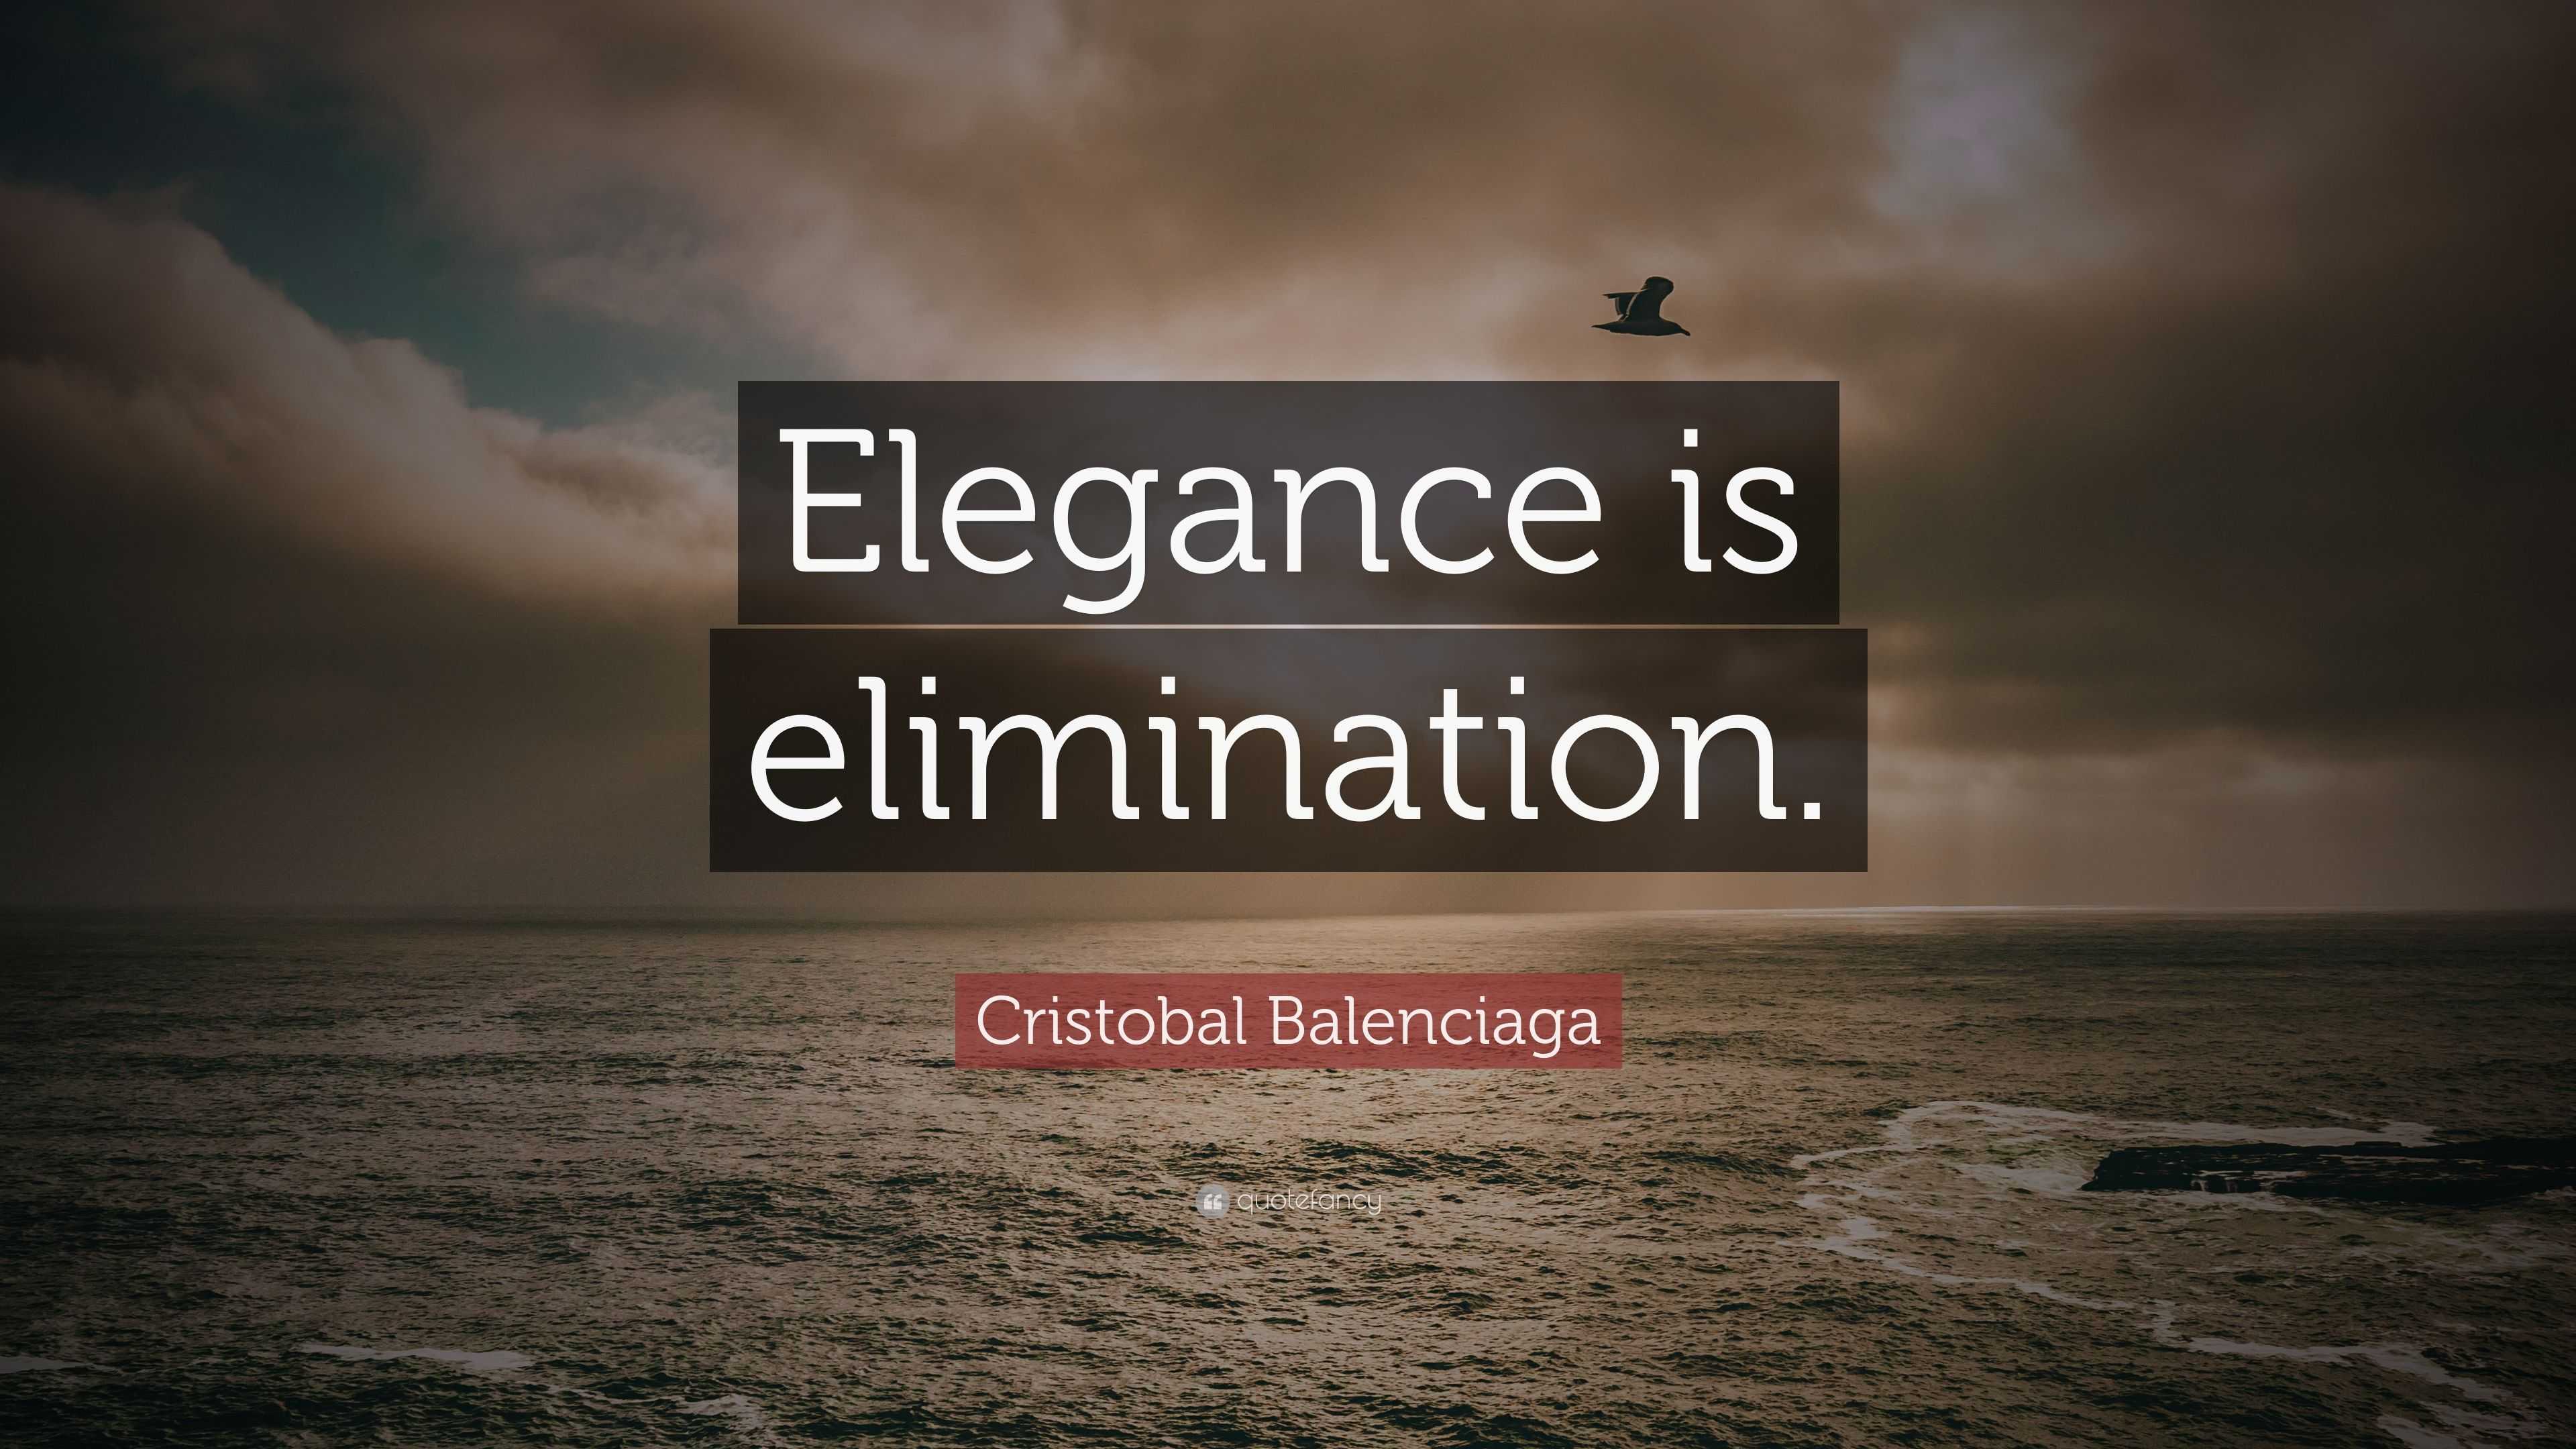 Cristobal Balenciaga “Elegance is elimination.”